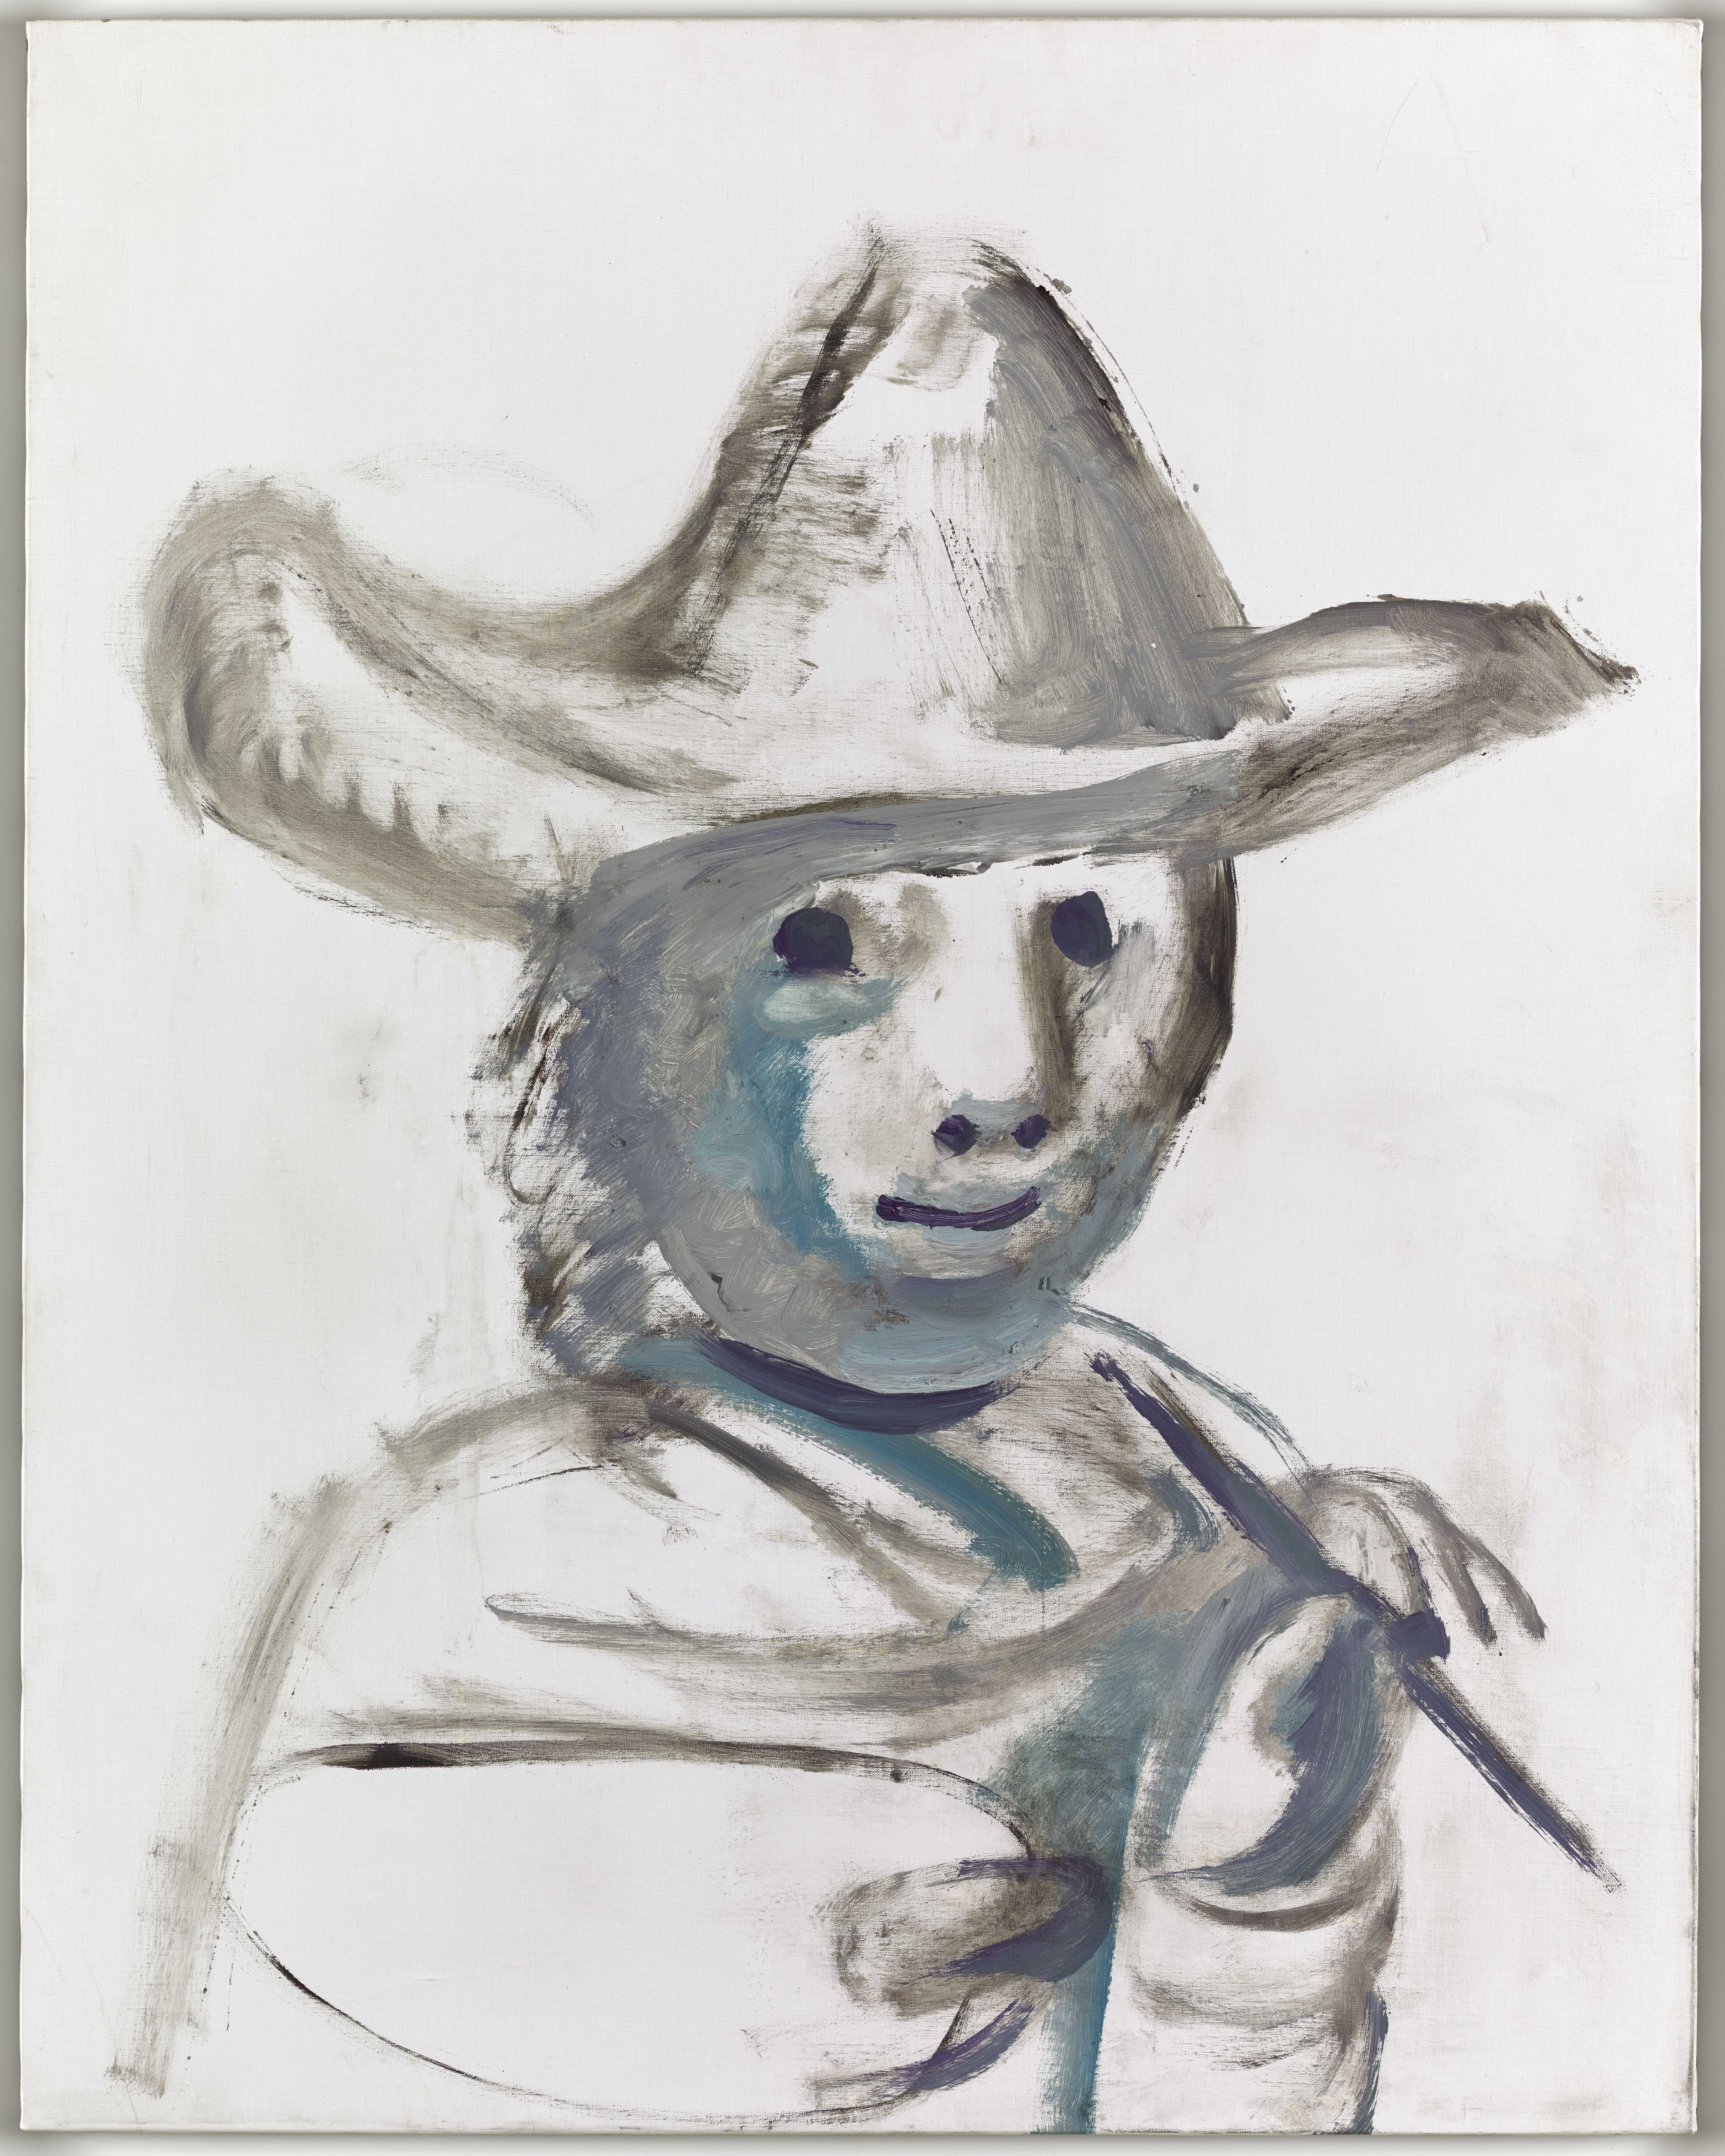 Picasso-Rutault. Grand Écart, Exhibition, Picasso National Museum, Paris: 20 November - 2 May 2019